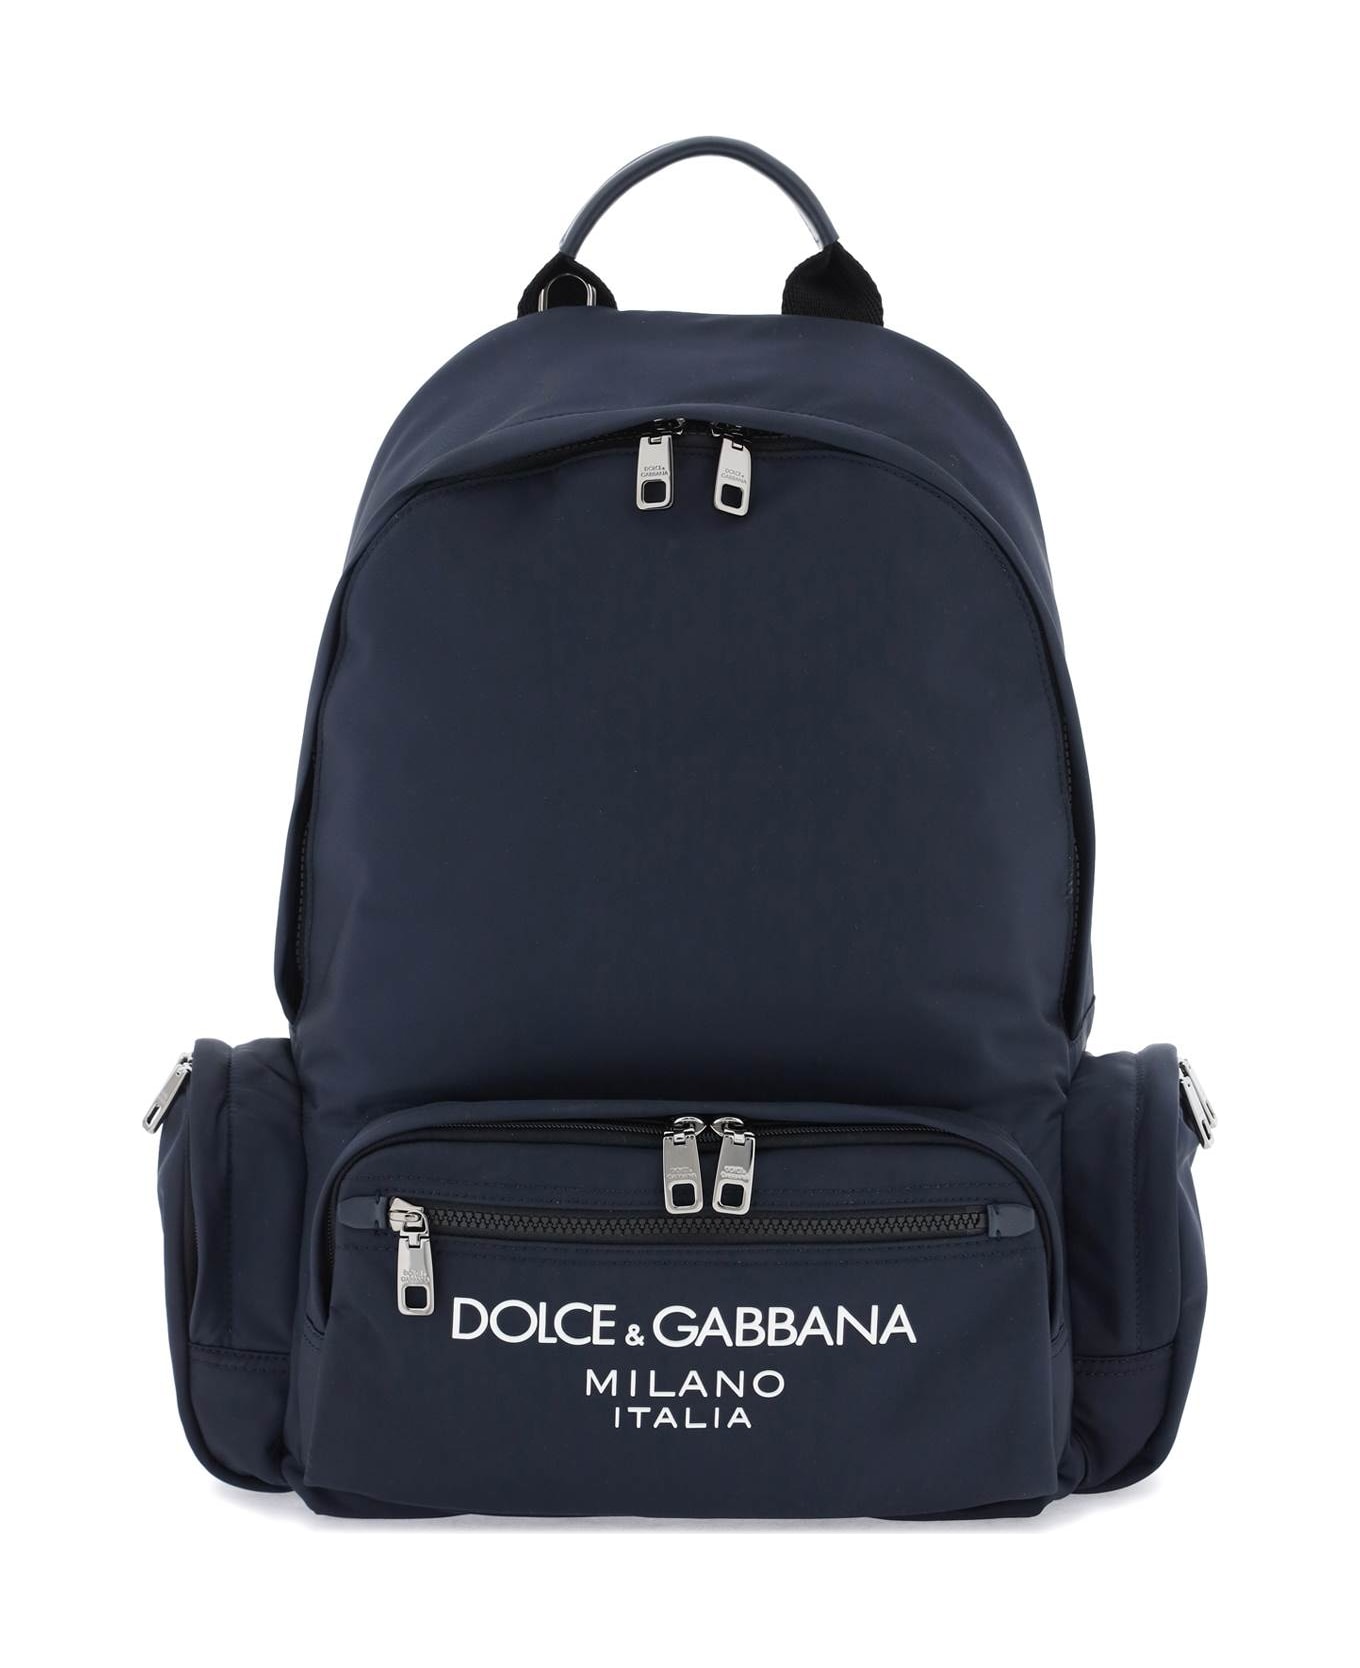 Dolce & Gabbana Nylon Backpack With Logo - BLU BLU NAVY (Blue)